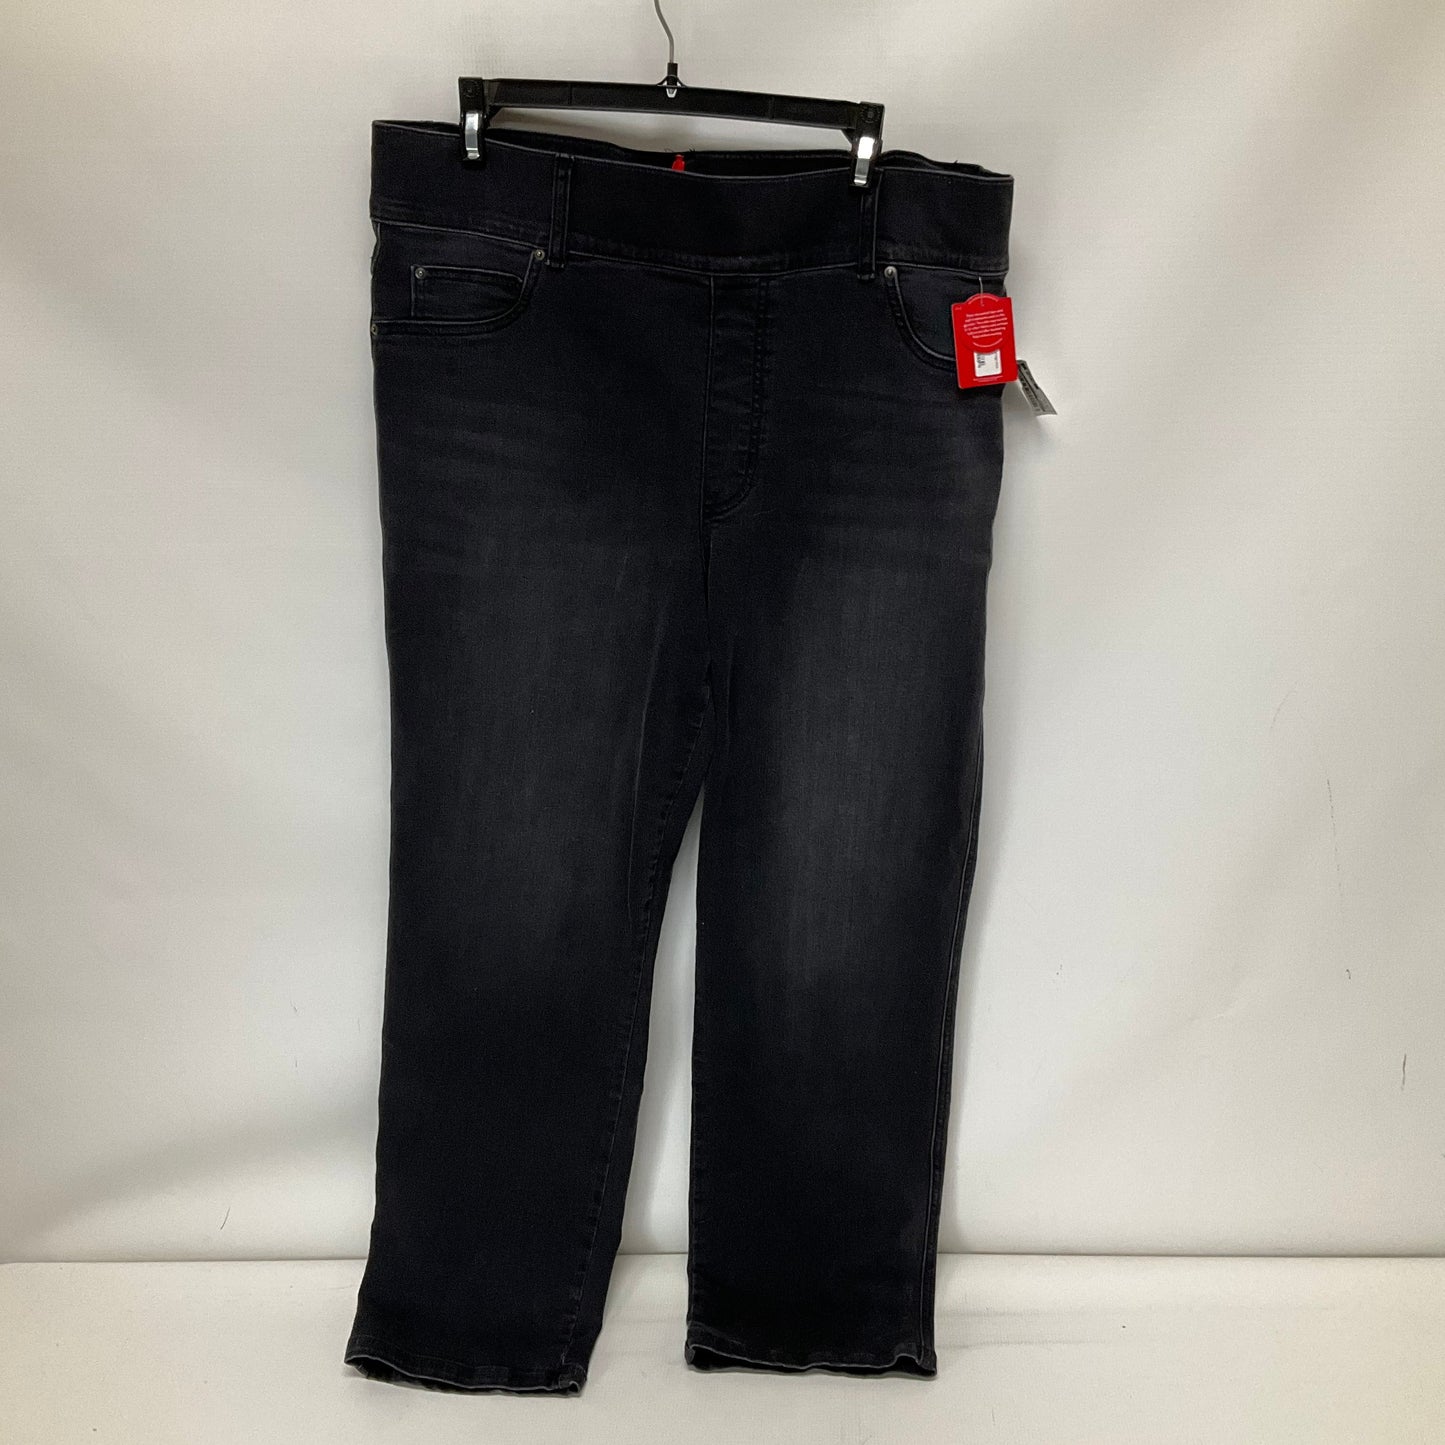 Black Denim Jeans Flared Spanx, Size 1x